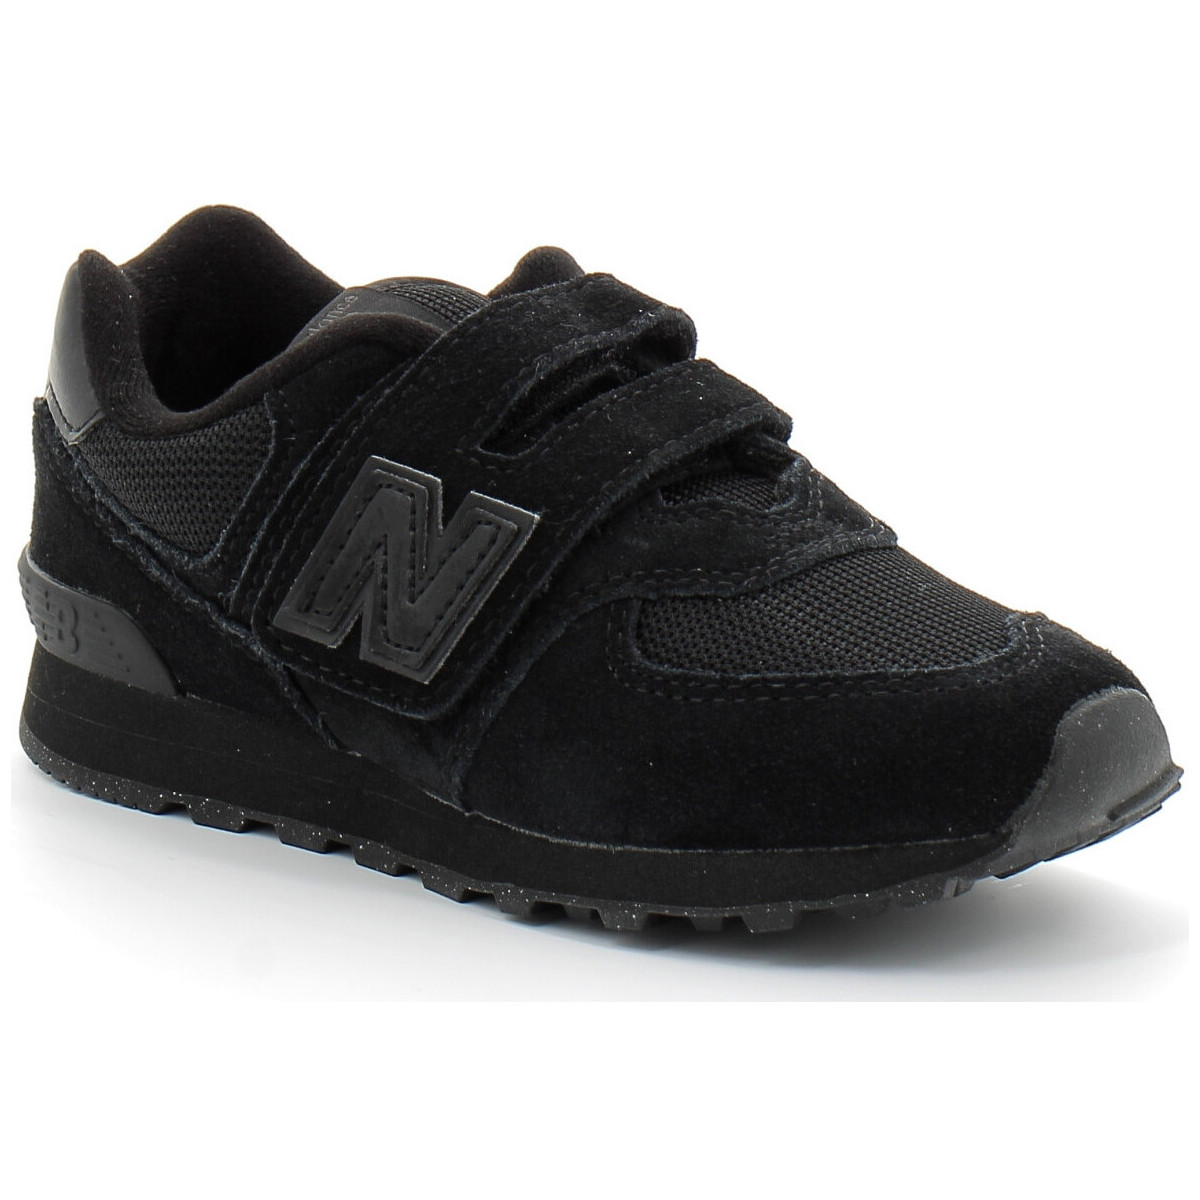 Chaussures Enfant Baskets mode New Balance PV574 Noir